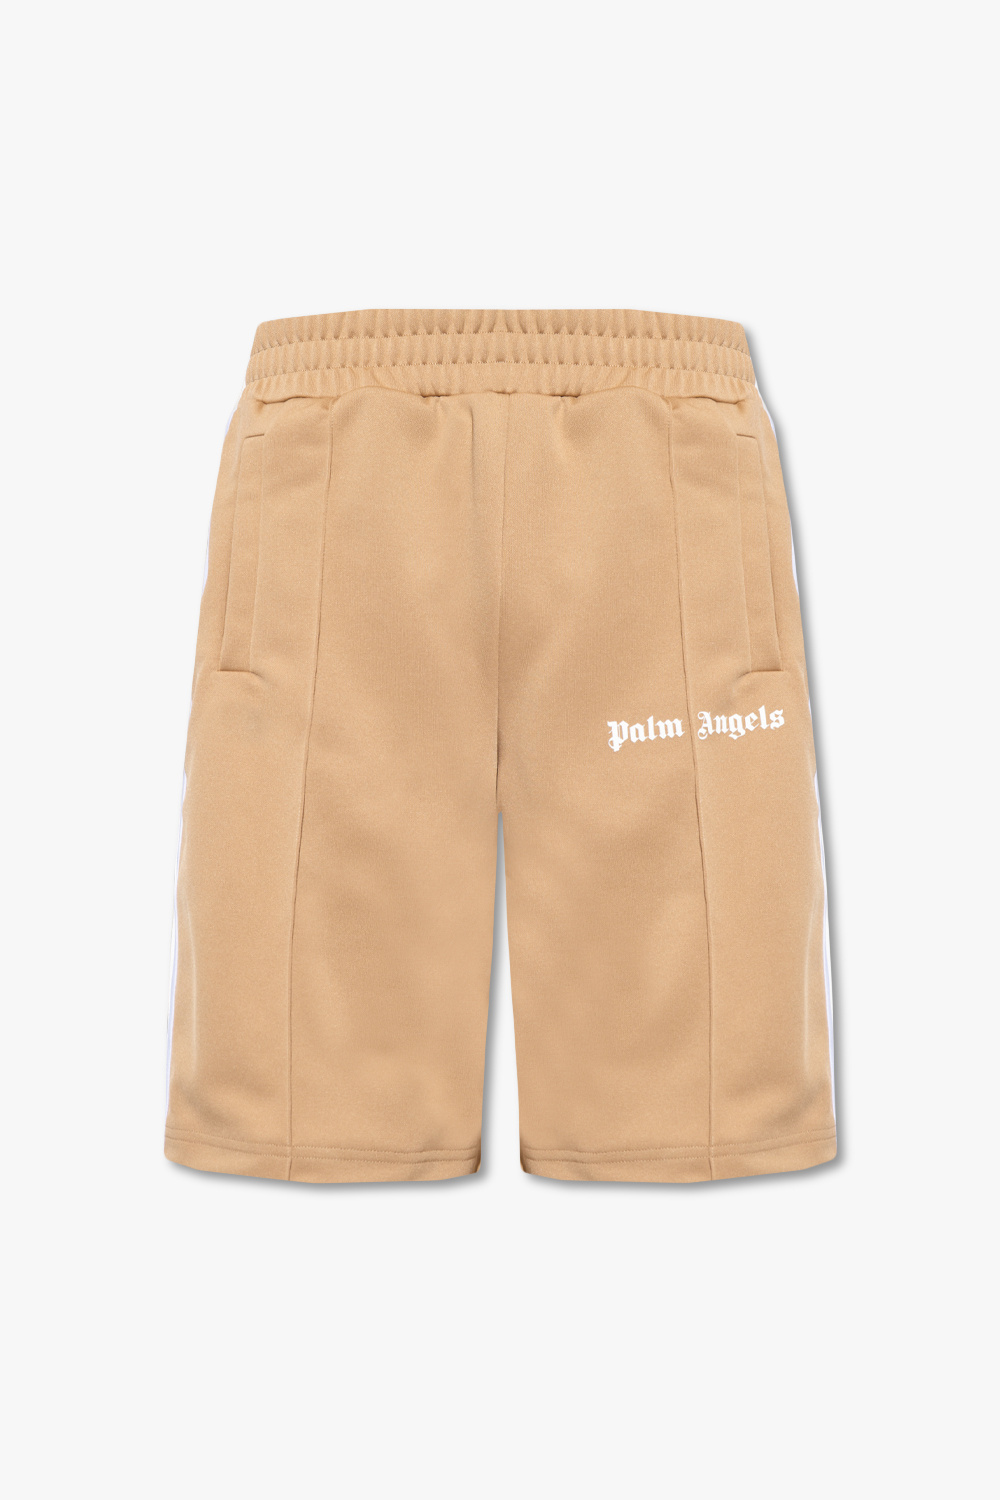 Palm Angels Levis 501 Hemmed Short 9 Mens Shorts